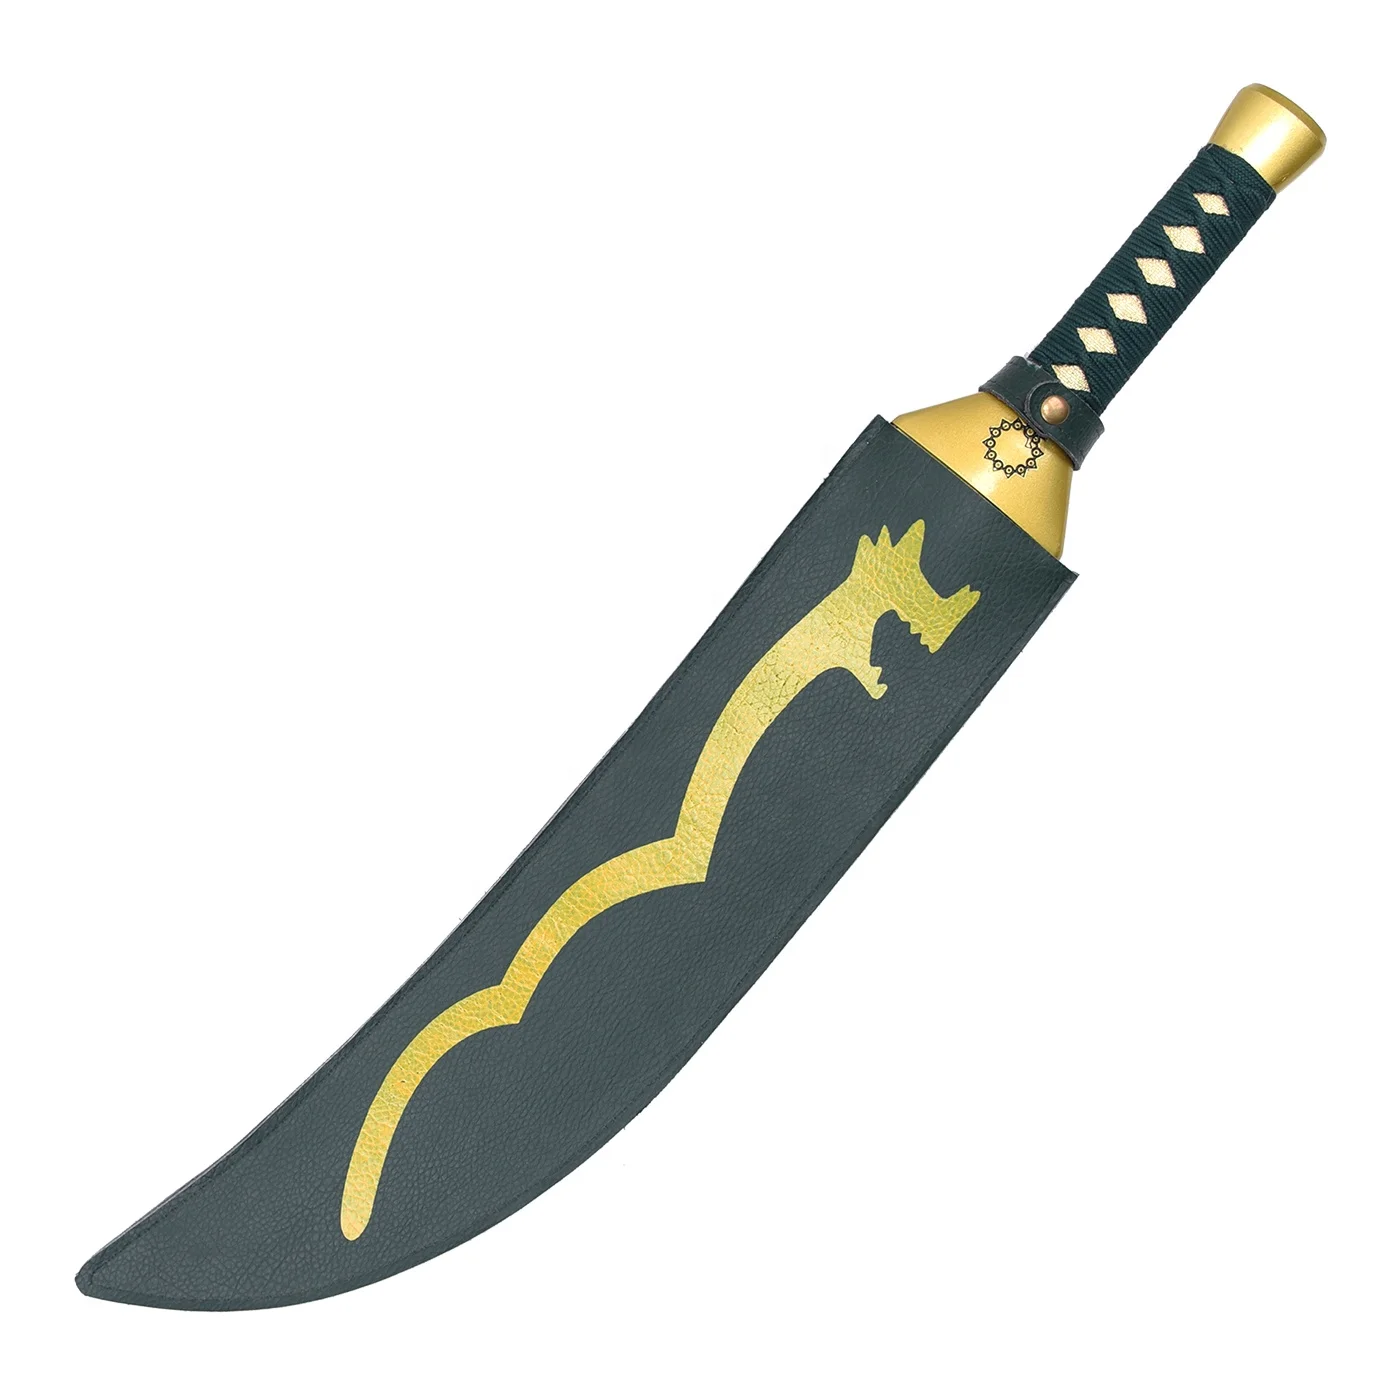 Hot Sales The Seven Deadly Sins Meliodas Sword Cosplay Anime Props Toy  Swords - Buy The Seven Deadly Sins,Anime Sword,Toy Swords Product on  